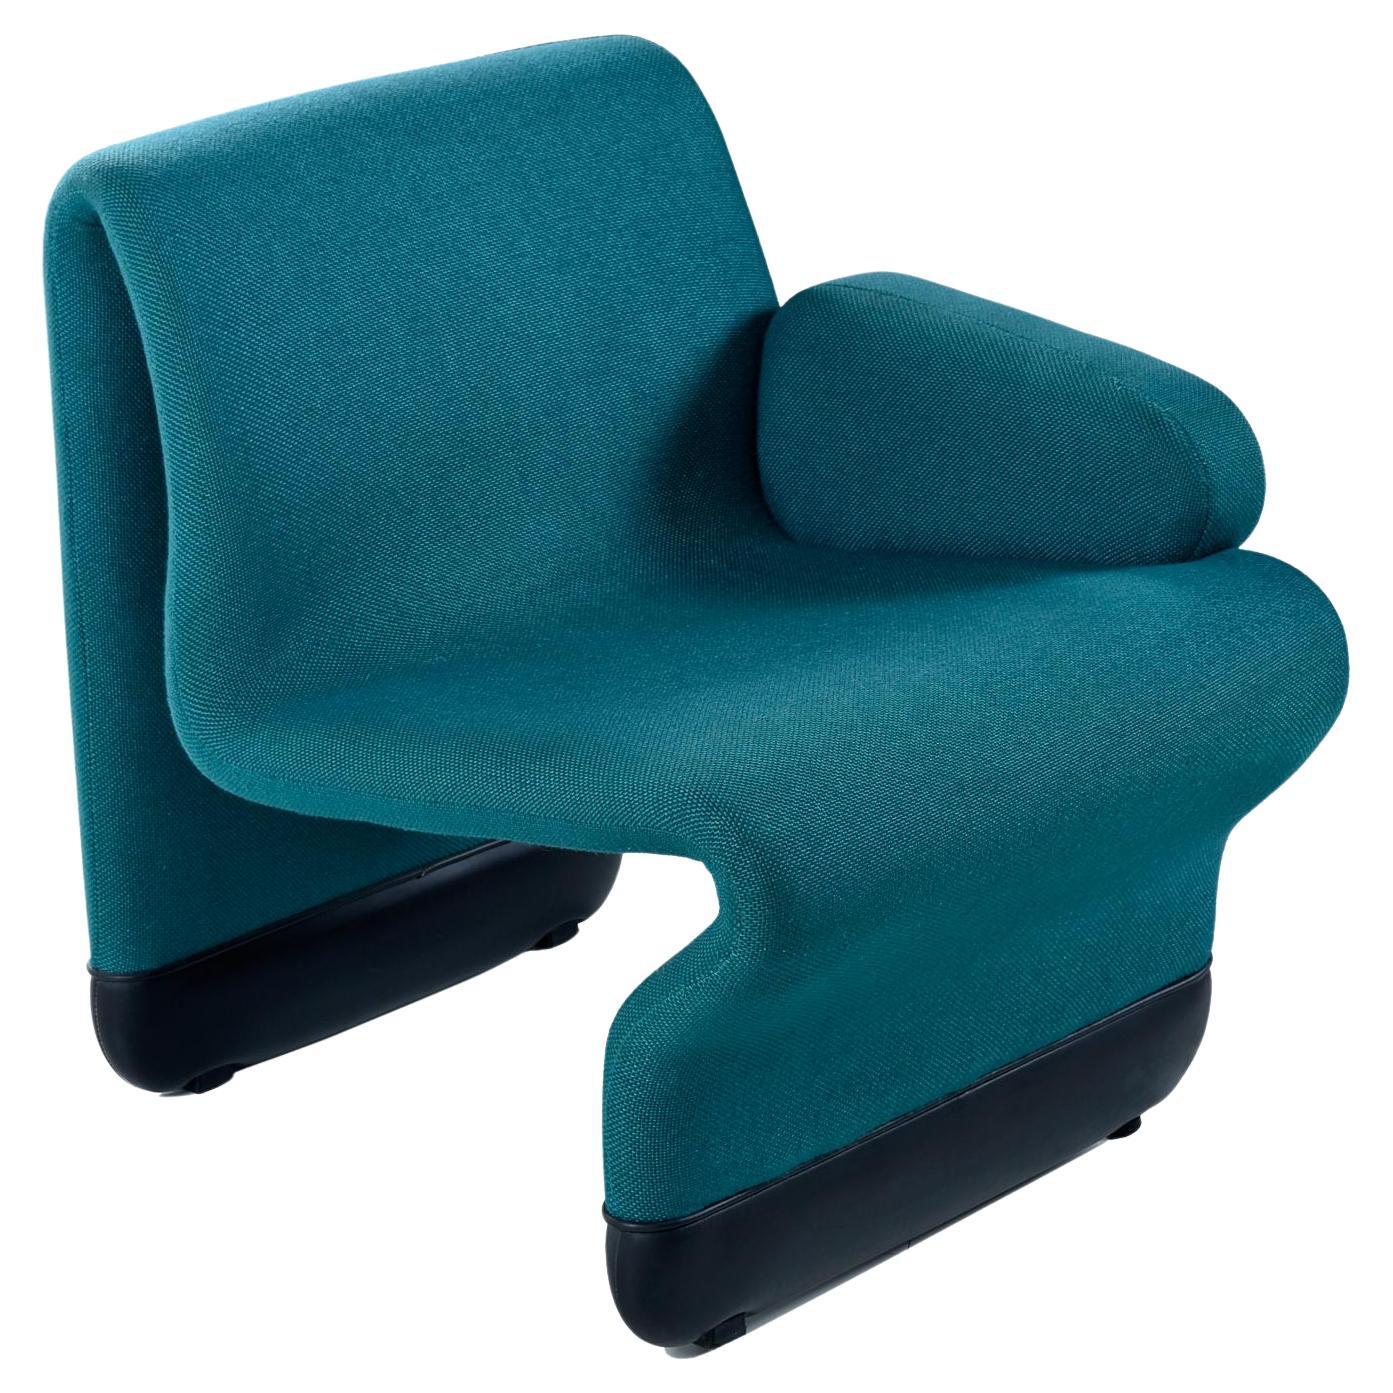 Ensemble de fauteuils de salon modulaires Ten Forward Star Trek TNG Paul Boulva pour Artopex en vente 6